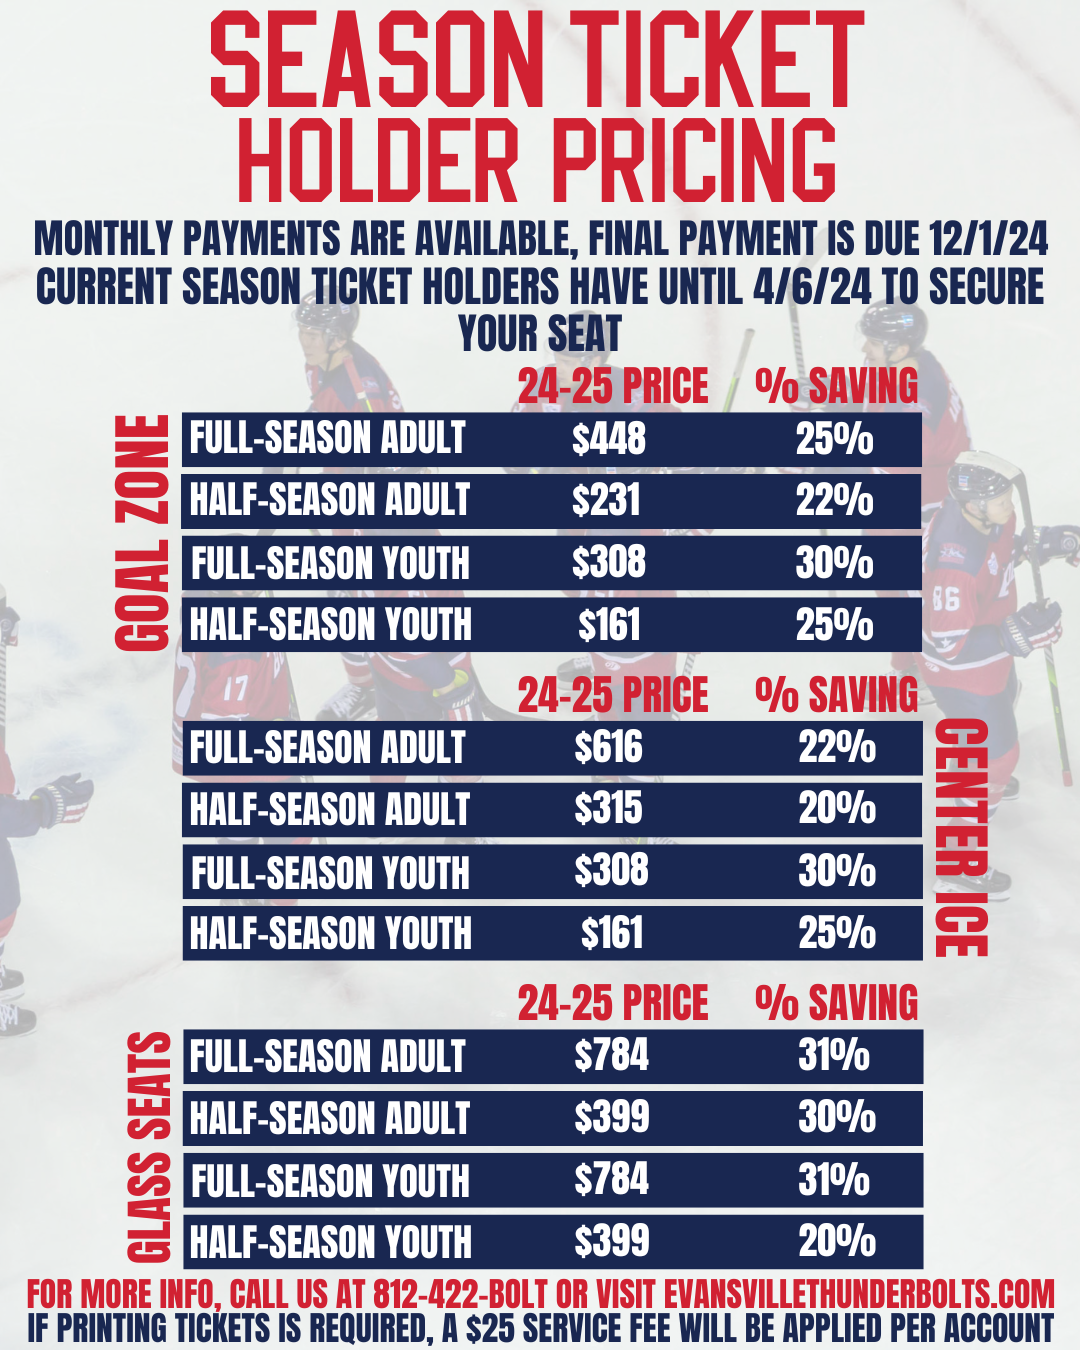 Season Ticket Holder Pricing